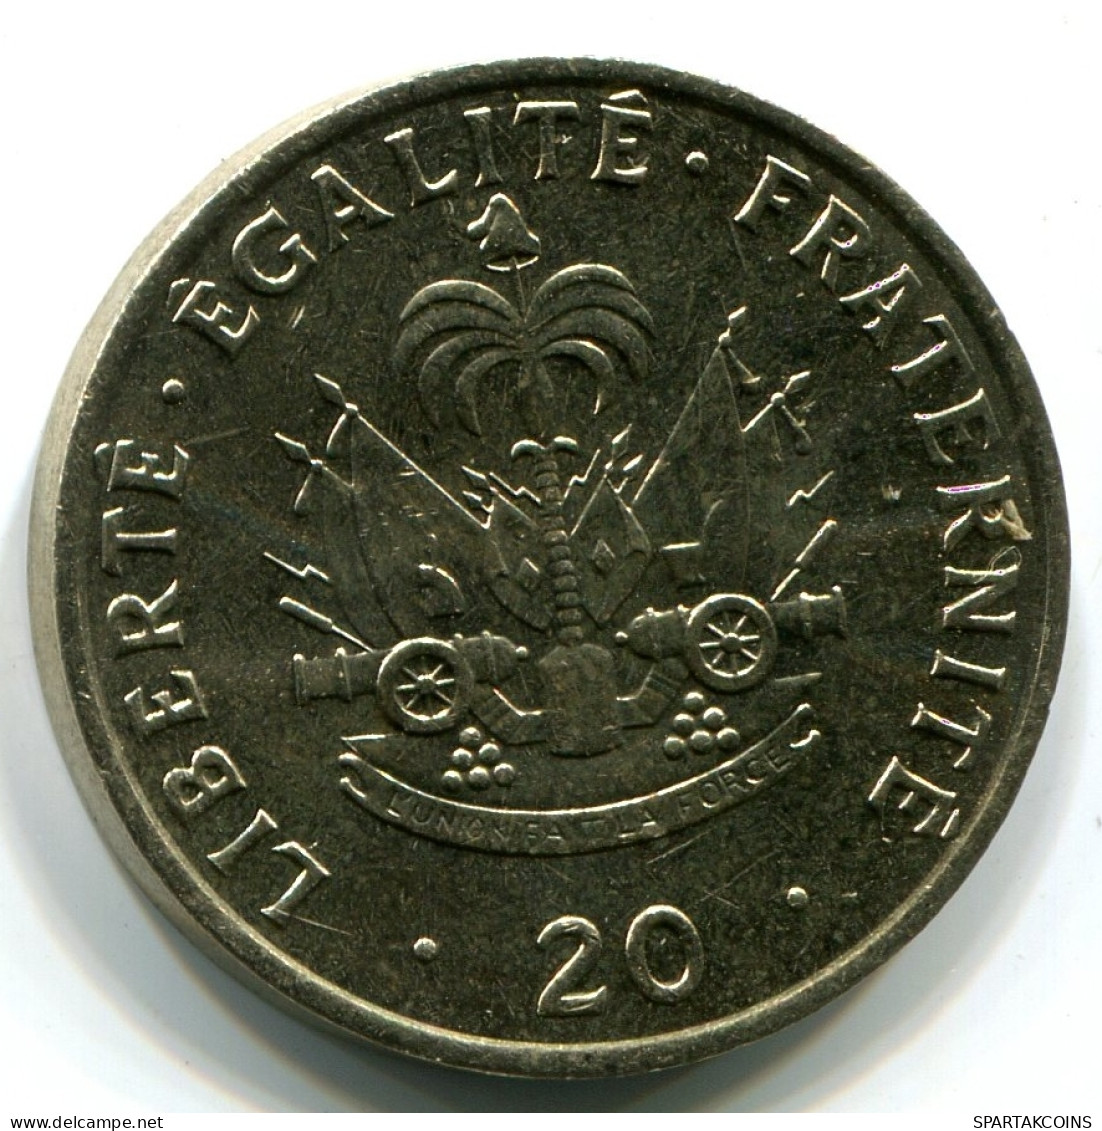 20 CENTIMES 1991 HAITI UNC Coin #W11005.U - Haití